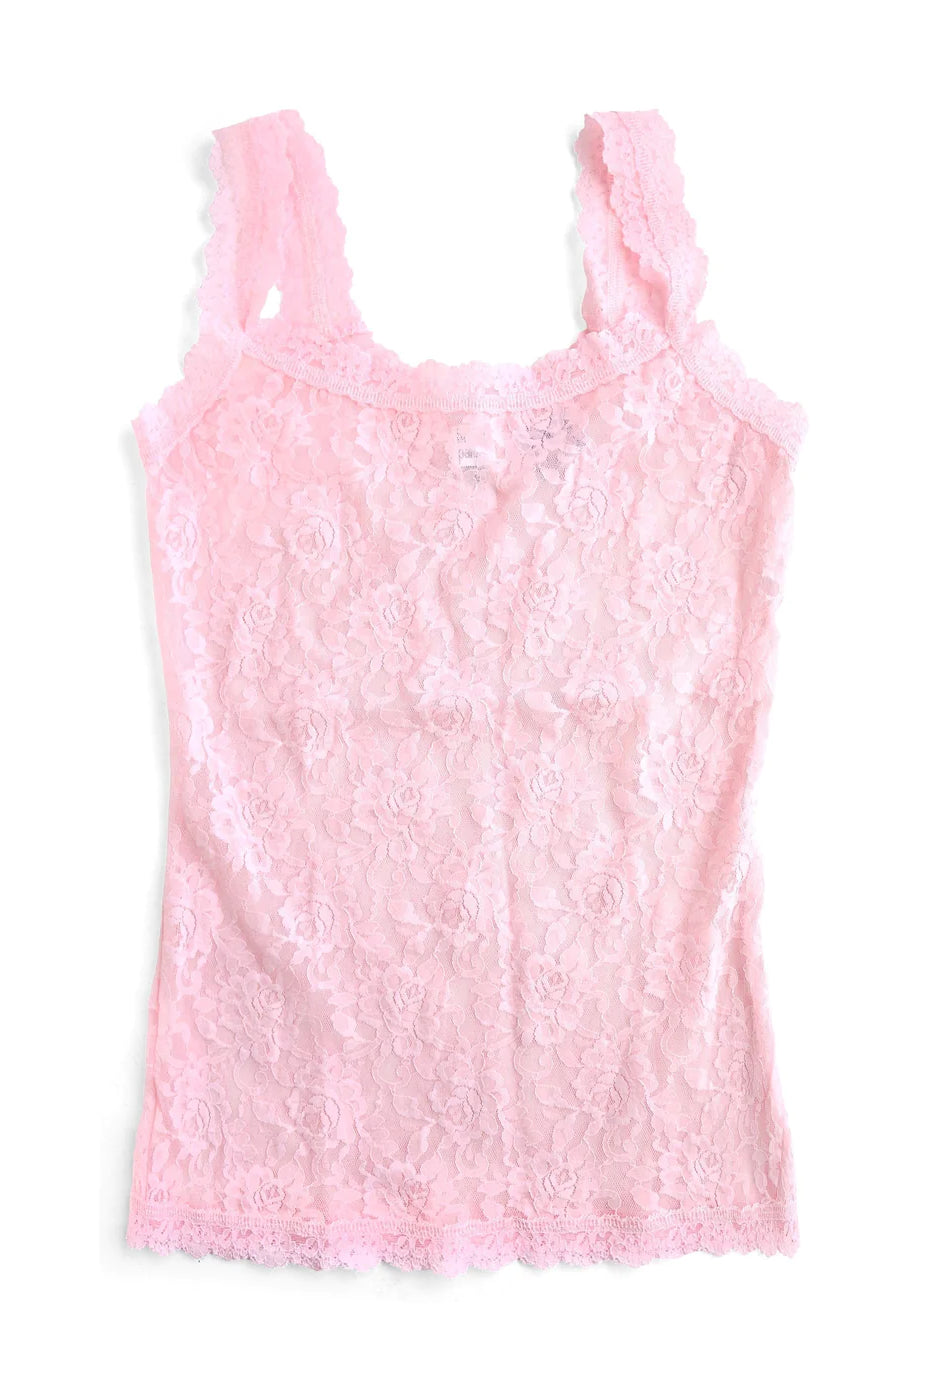 Signature Lace Classic Cami - Bliss Pink - Flirt! Luxe Lingerie & Sleepwear